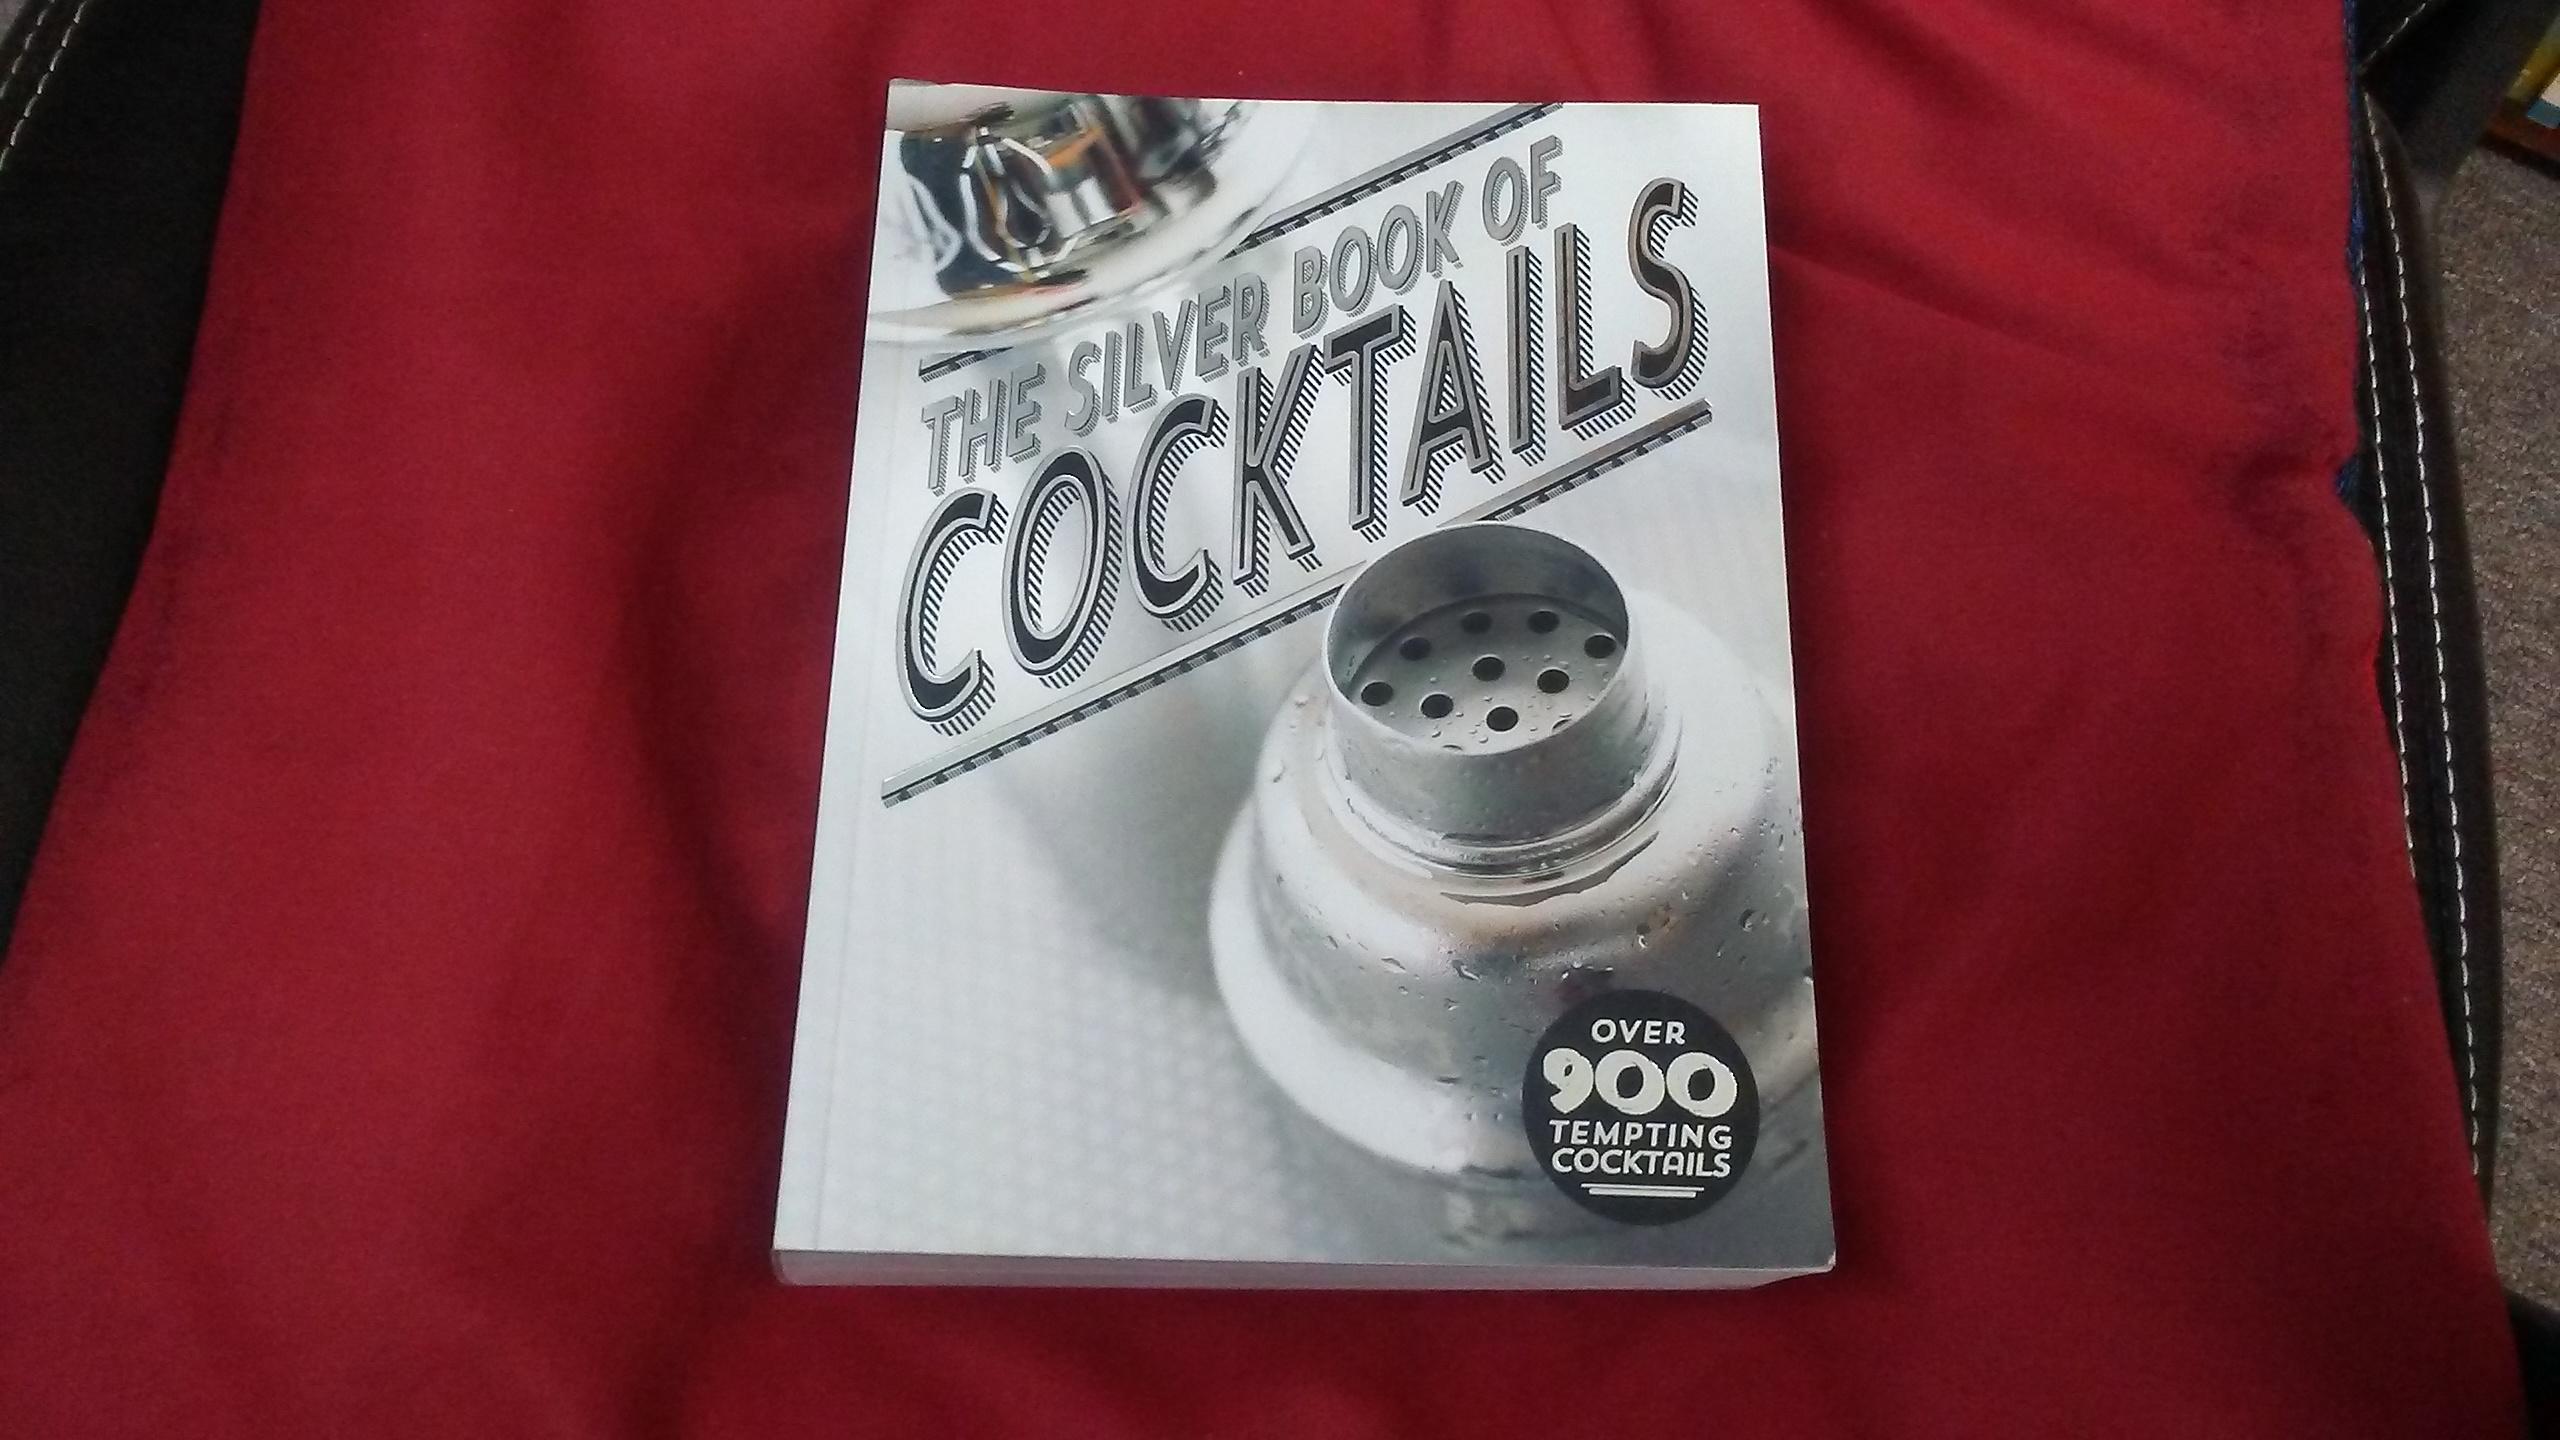 THE SILVER BOOK OF COCKTAILS Over 900 Tempting Cocktails - CARLA BARDI, LORENZO BIGONGIARI